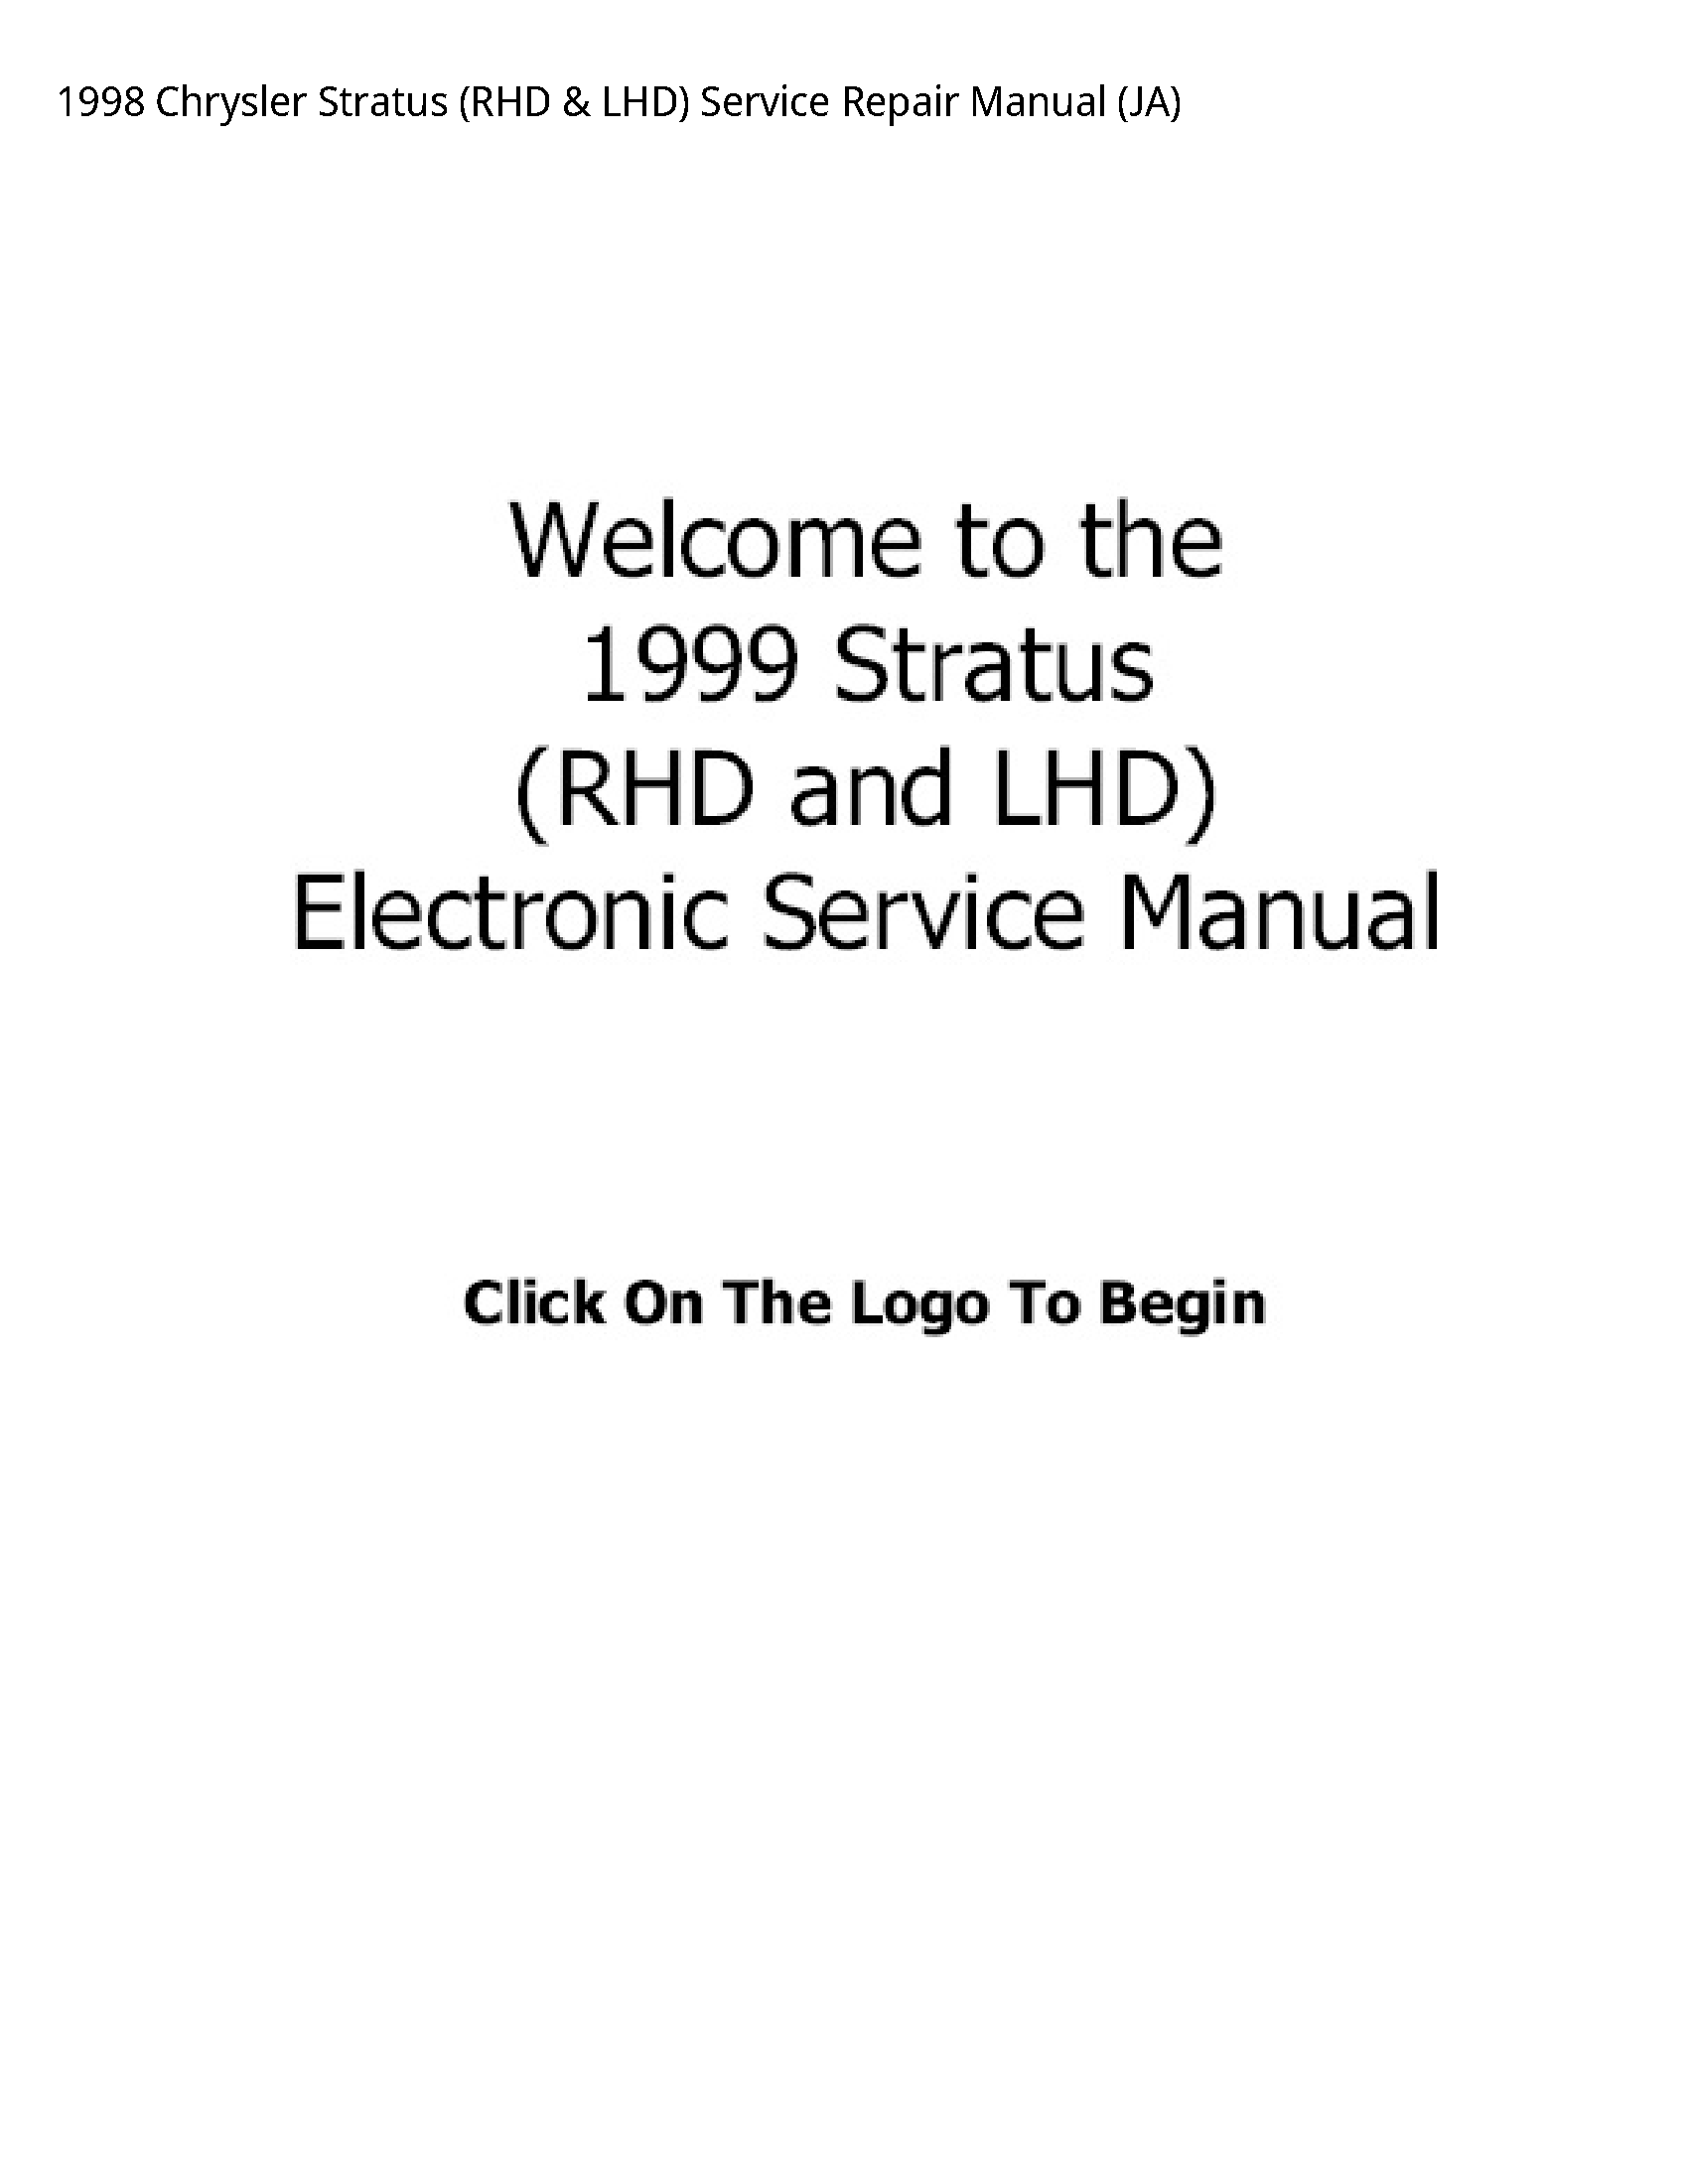 Chrysler Stratus (RHD LHD) manual